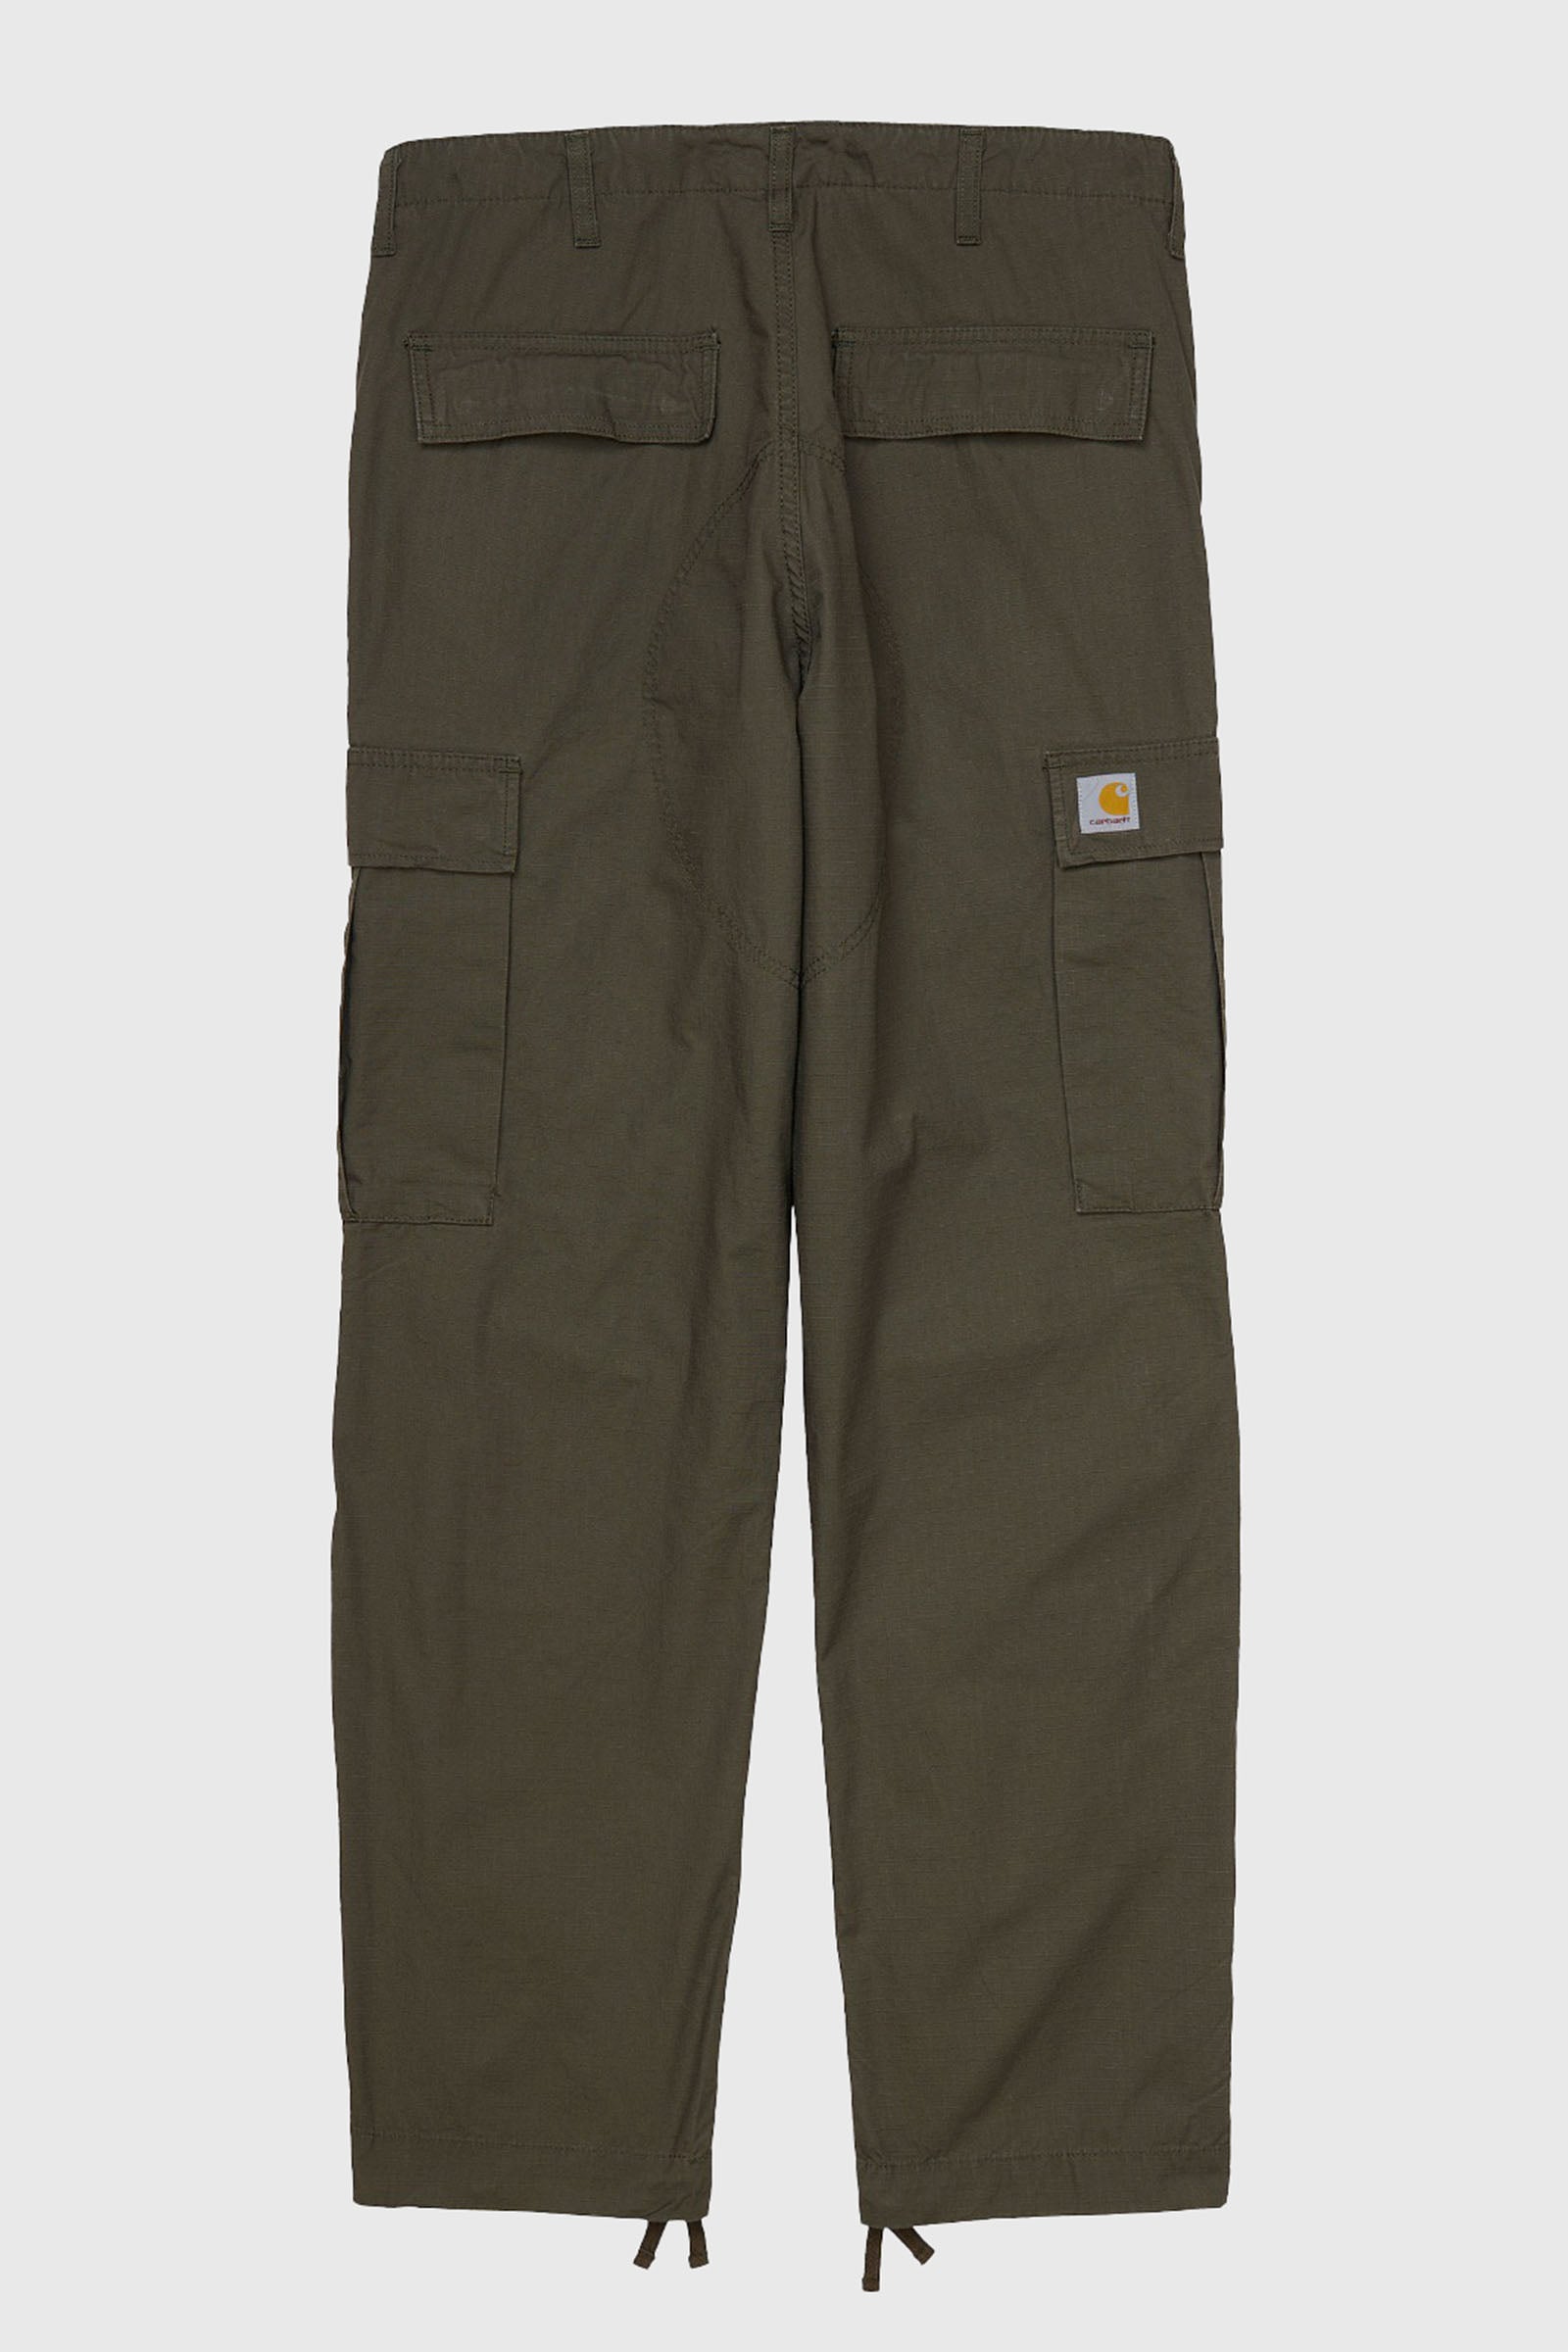 Carhartt Wip Pantalone Regular Cargo Verde Militare - 8